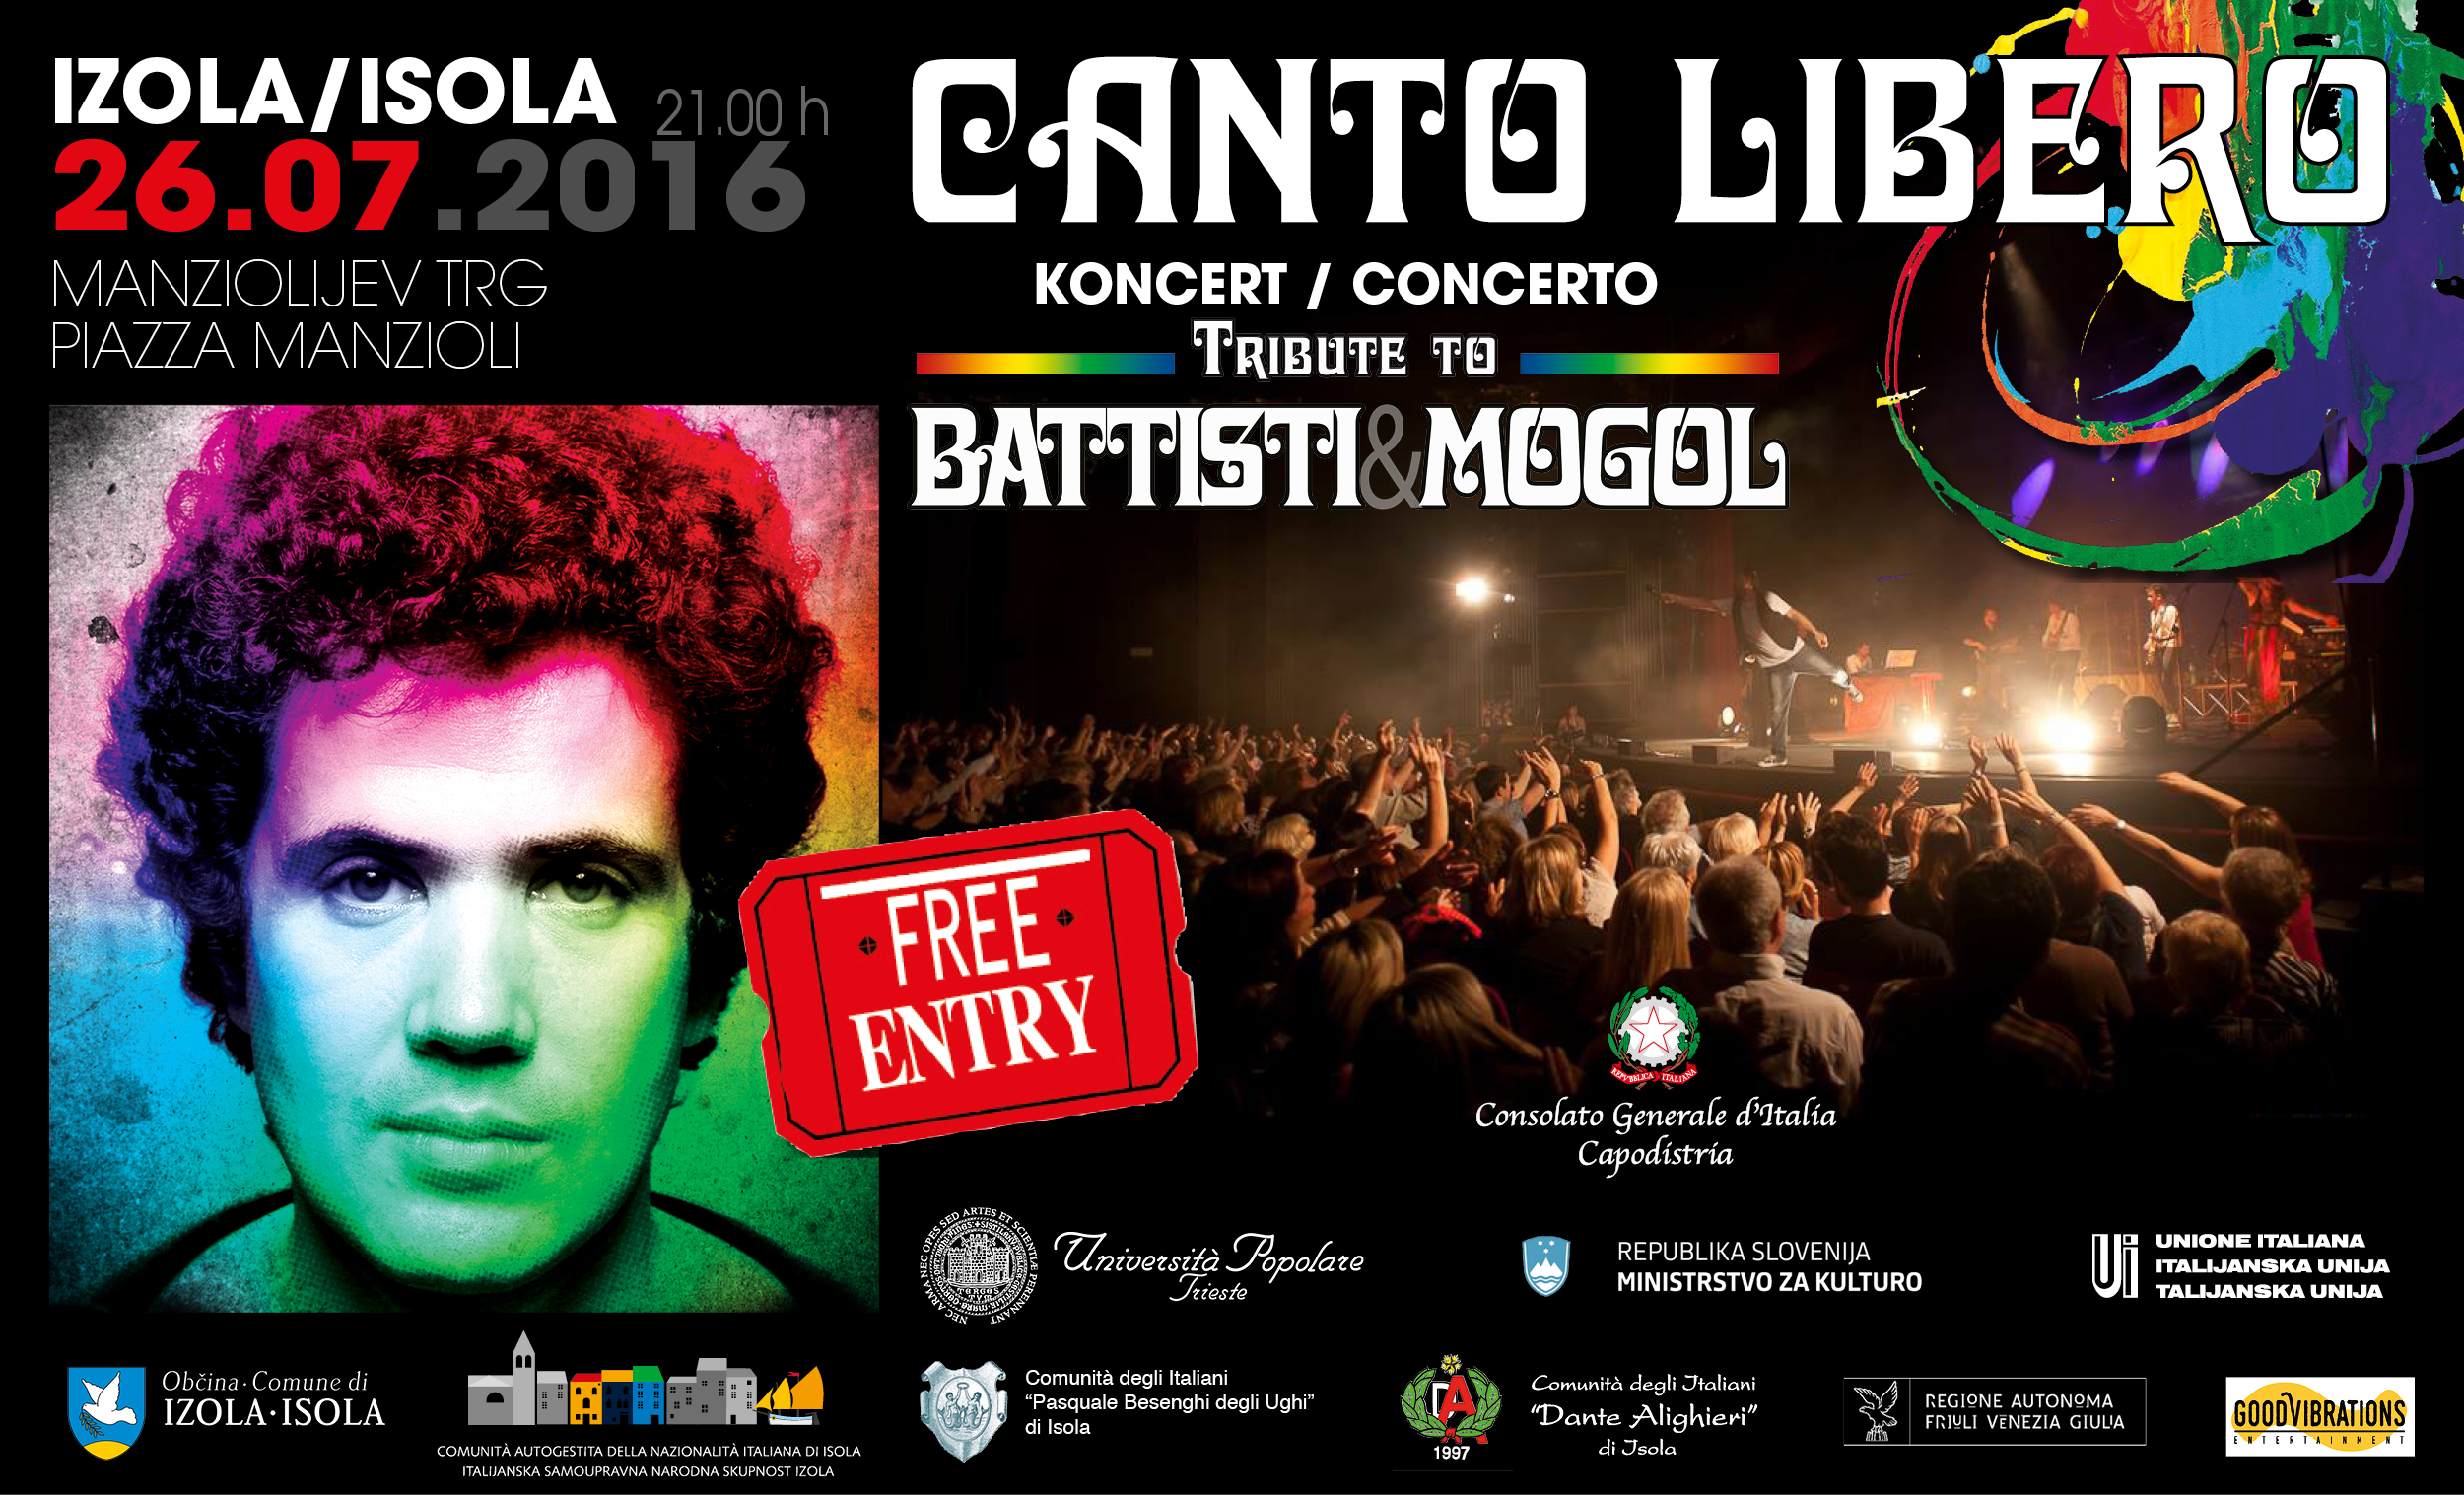 “Canto Libero” Summer Tour: 2^ data ISOLA (Slovenia)